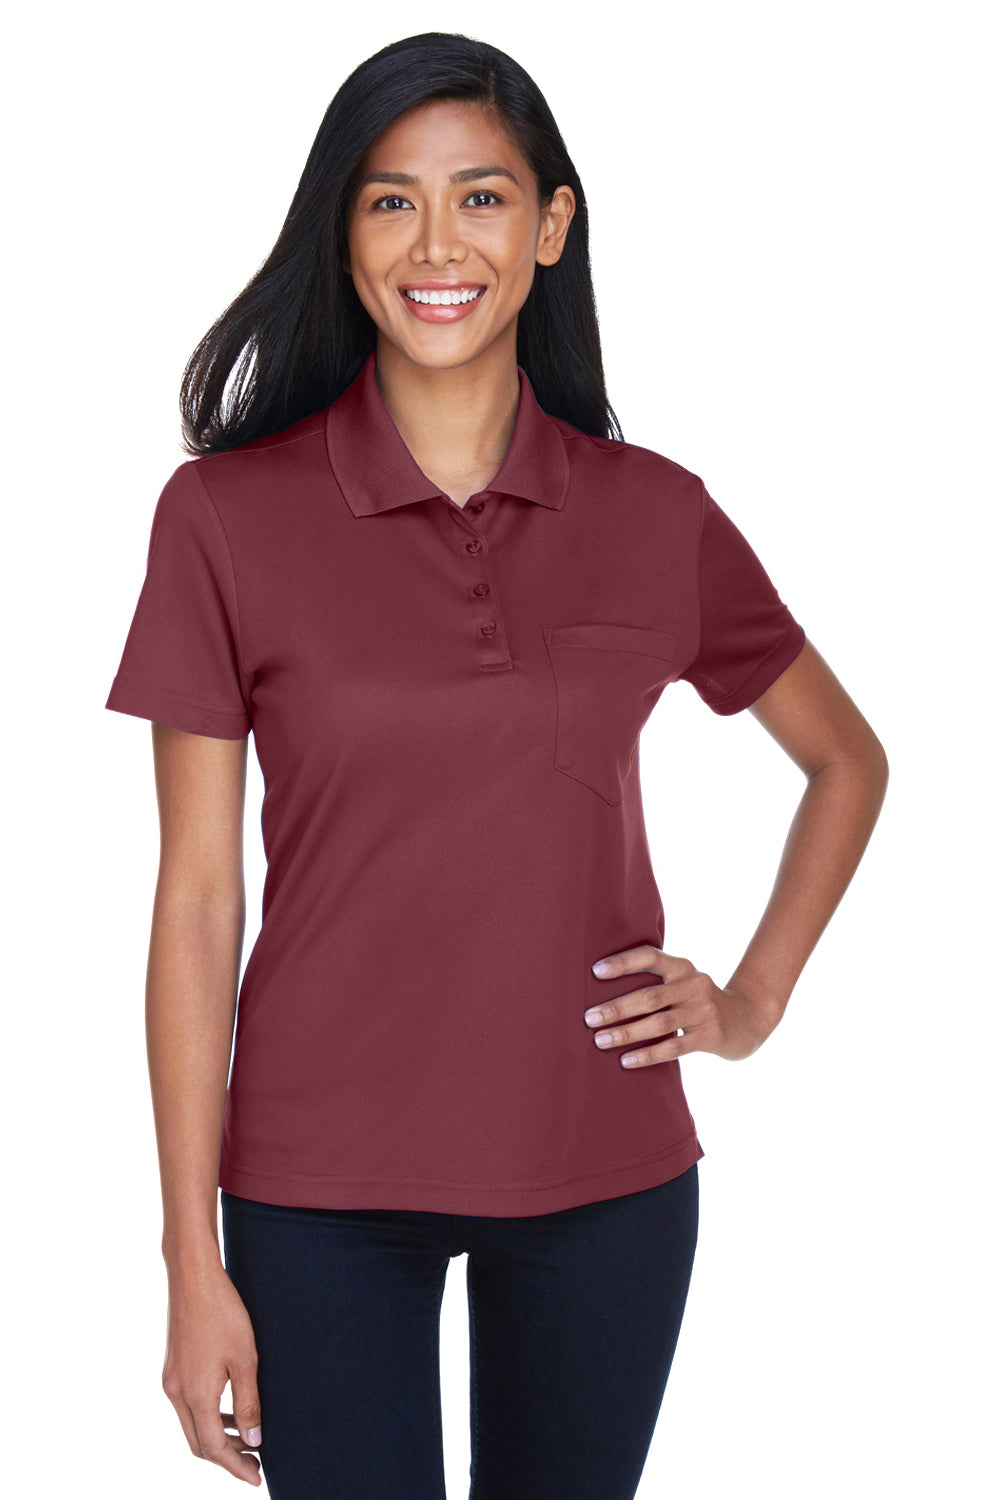 Core 365 78181P Womens Origin Performance Moisture Wicking Short Sleeve Polo Shirt w/ Pocket Burgundy Front